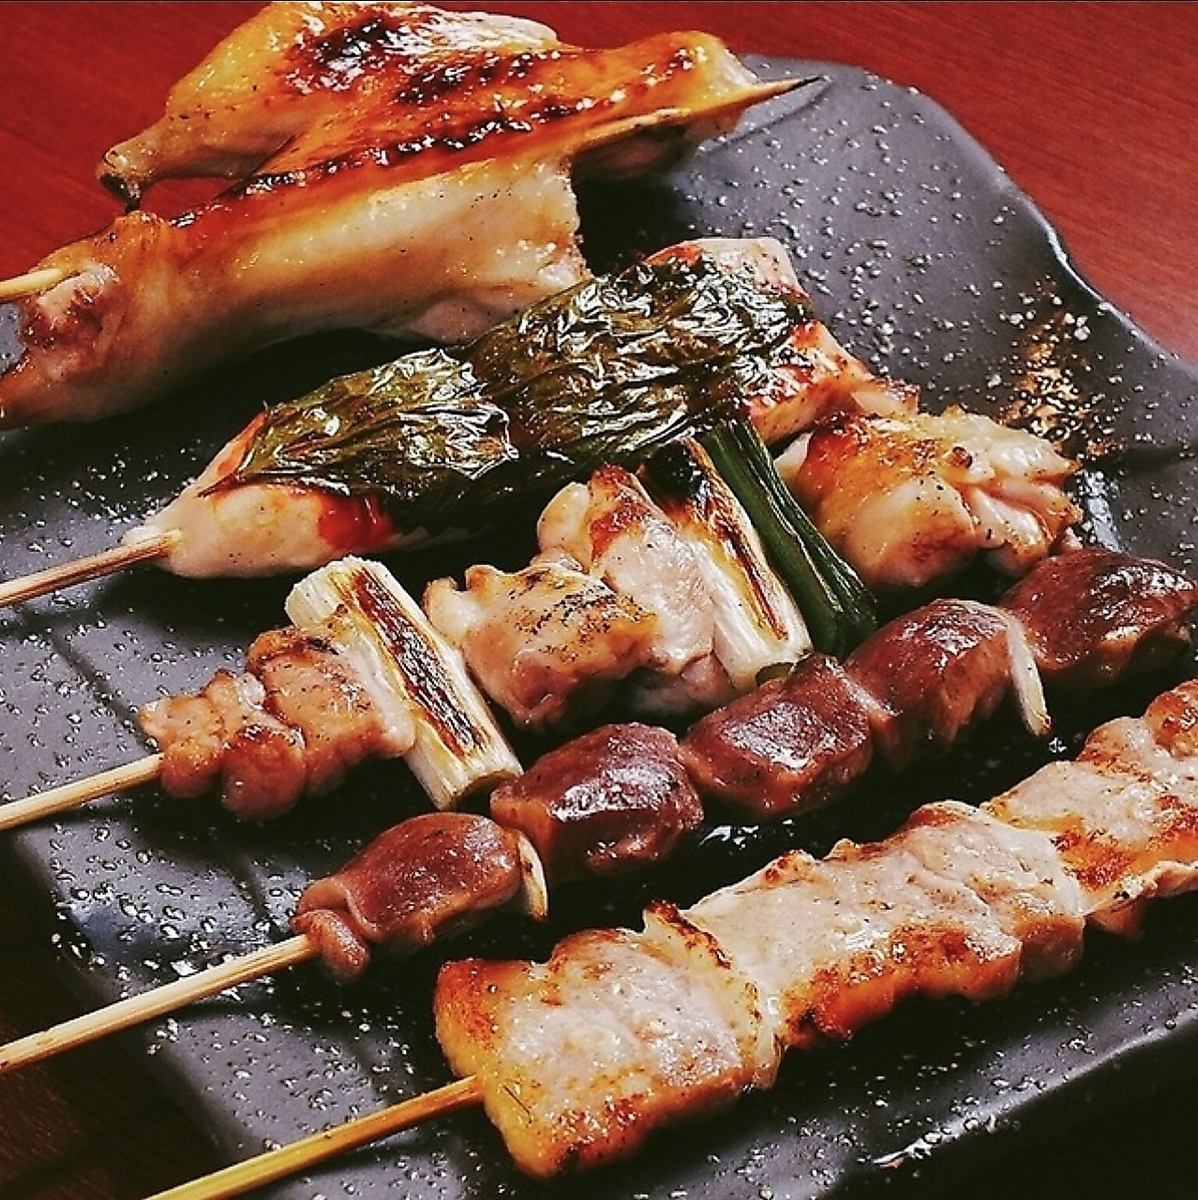 Meat sushi/shabu-shabu/yakitori all-you-can-eat & all-you-can-drink plan 3000 yen